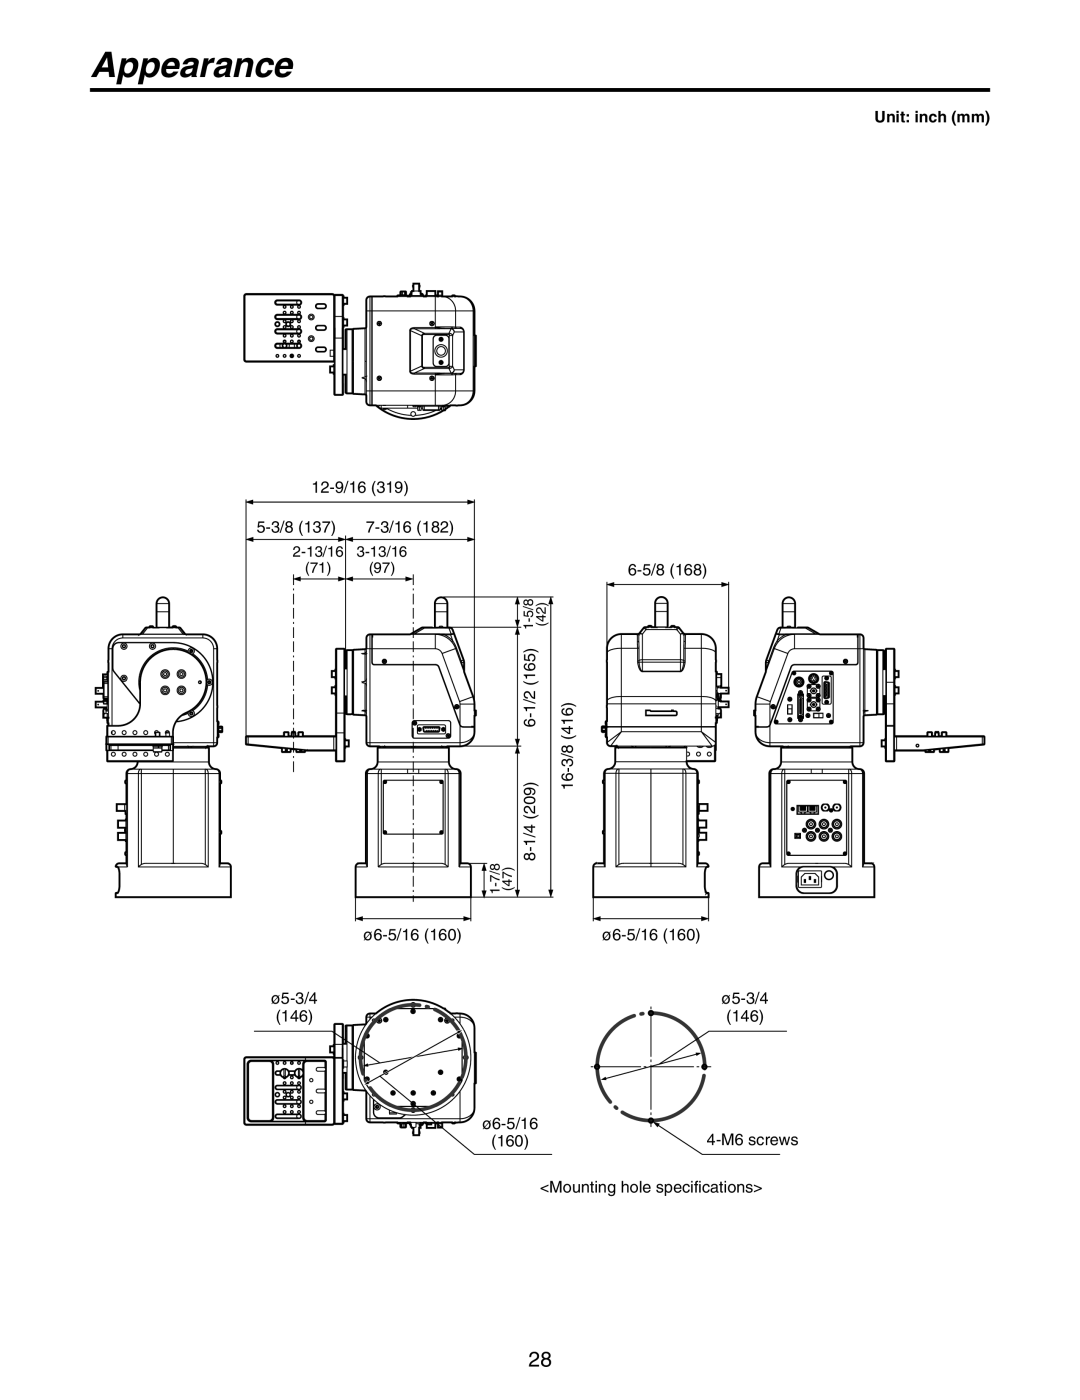 Panasonic AW-PH405N manual Appearance, Unit inch mm 